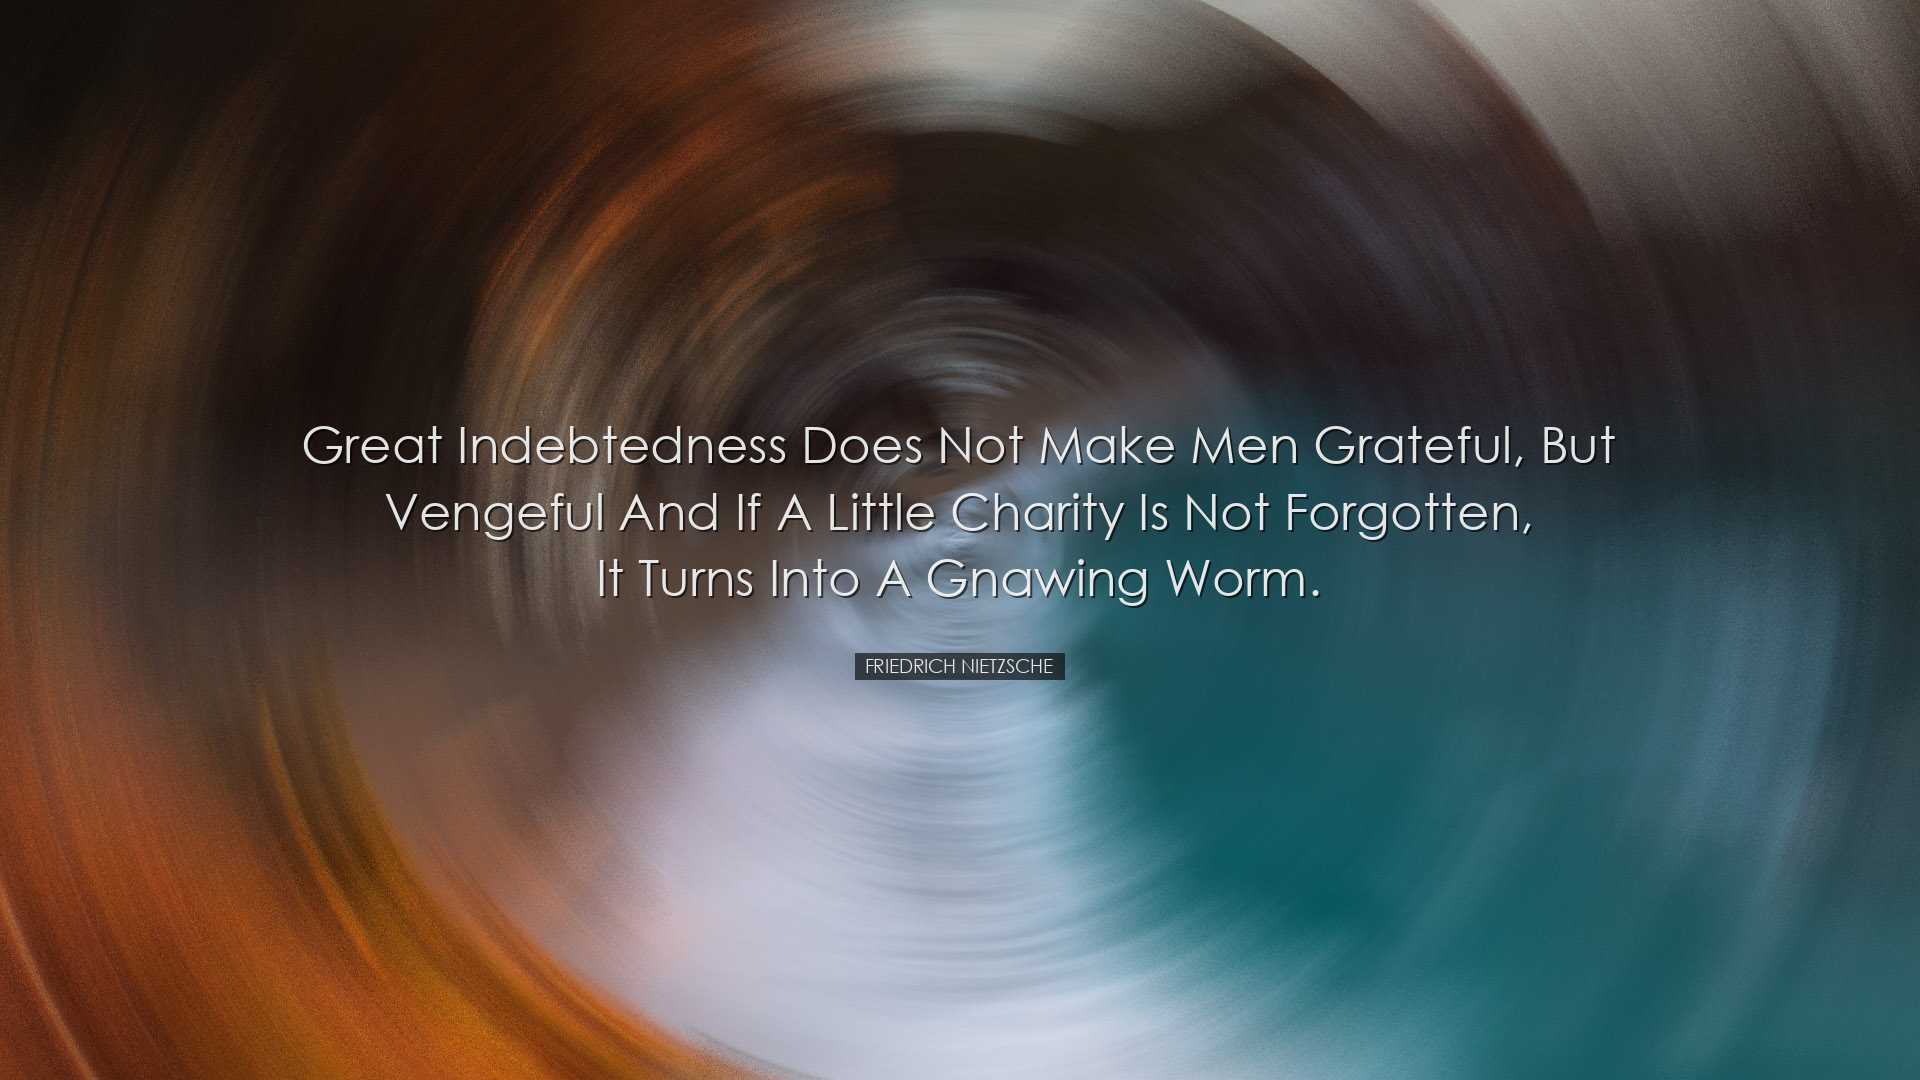 Great indebtedness does not make men grateful, but vengeful and if